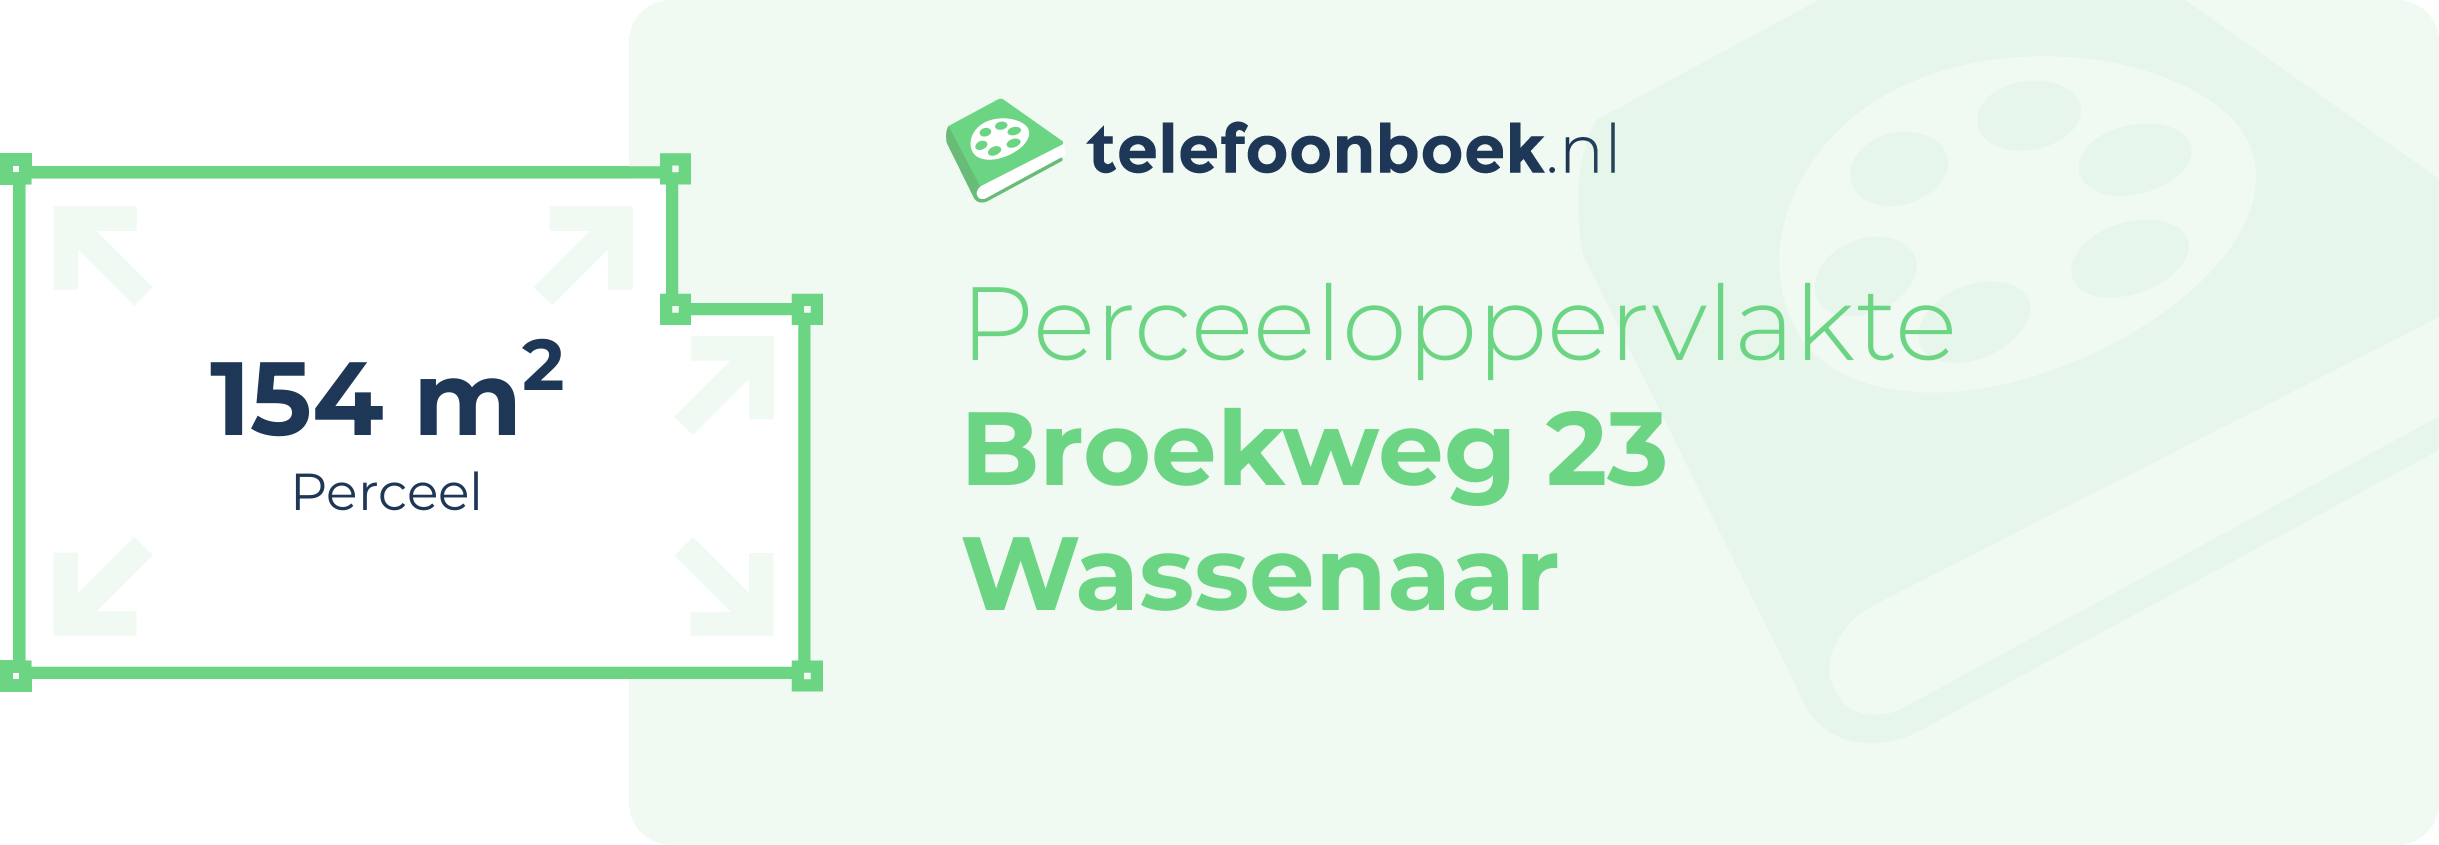 Perceeloppervlakte Broekweg 23 Wassenaar